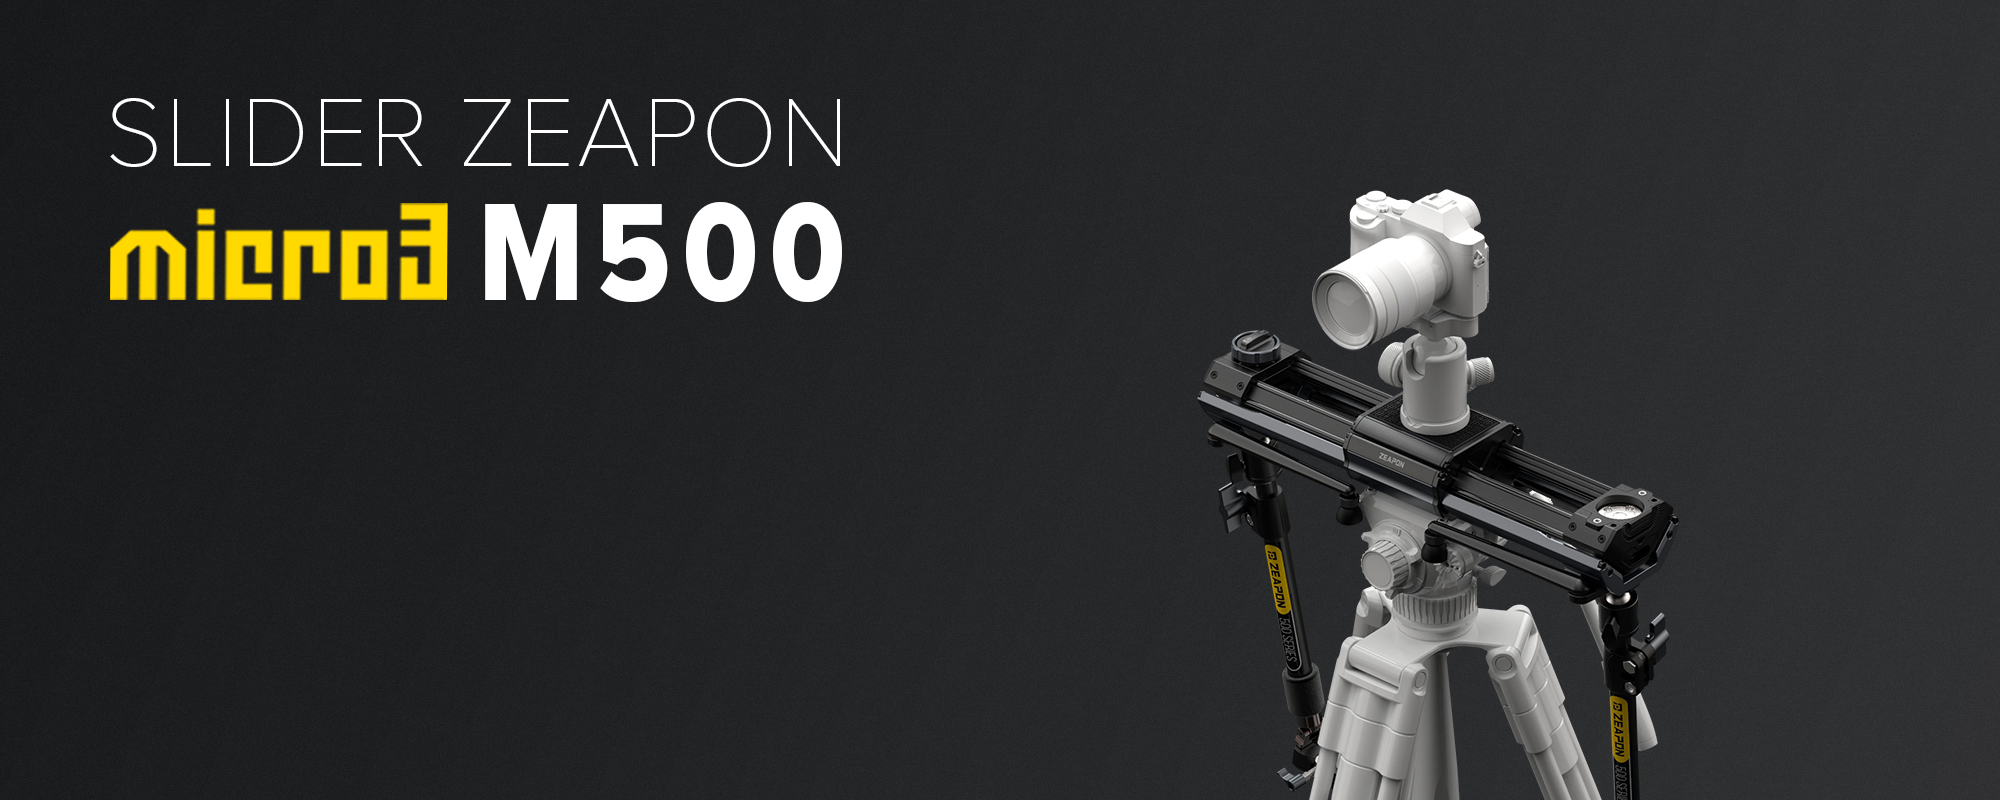 Slider Zeapon Micro 3 M500